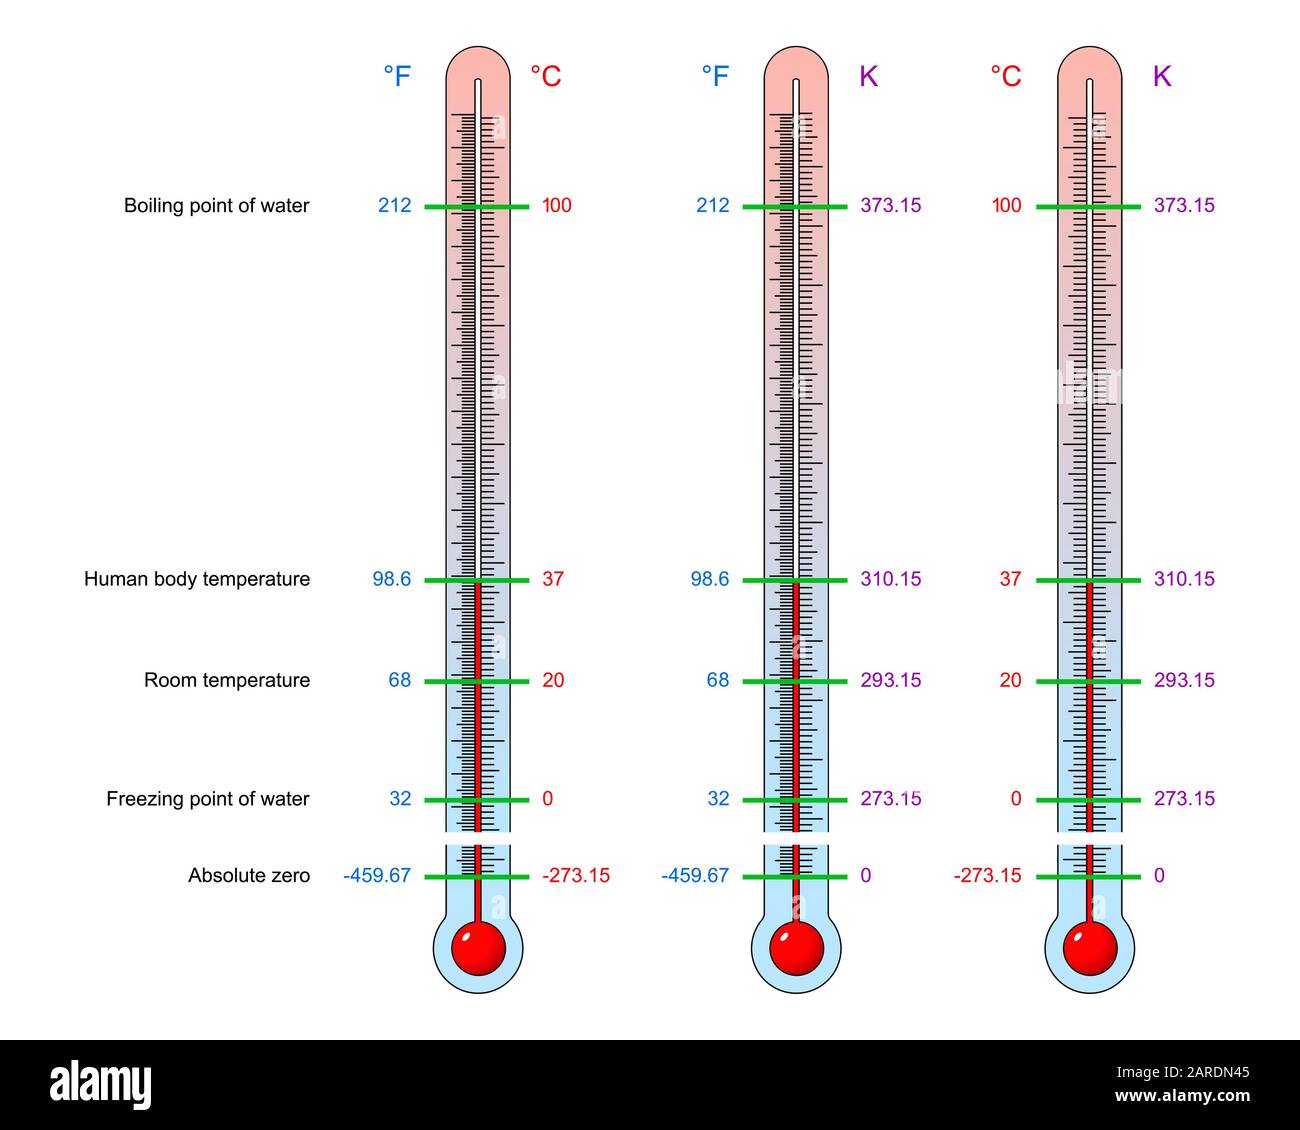 Celsius Scale Imagenes Recortadas De Stock Alamy